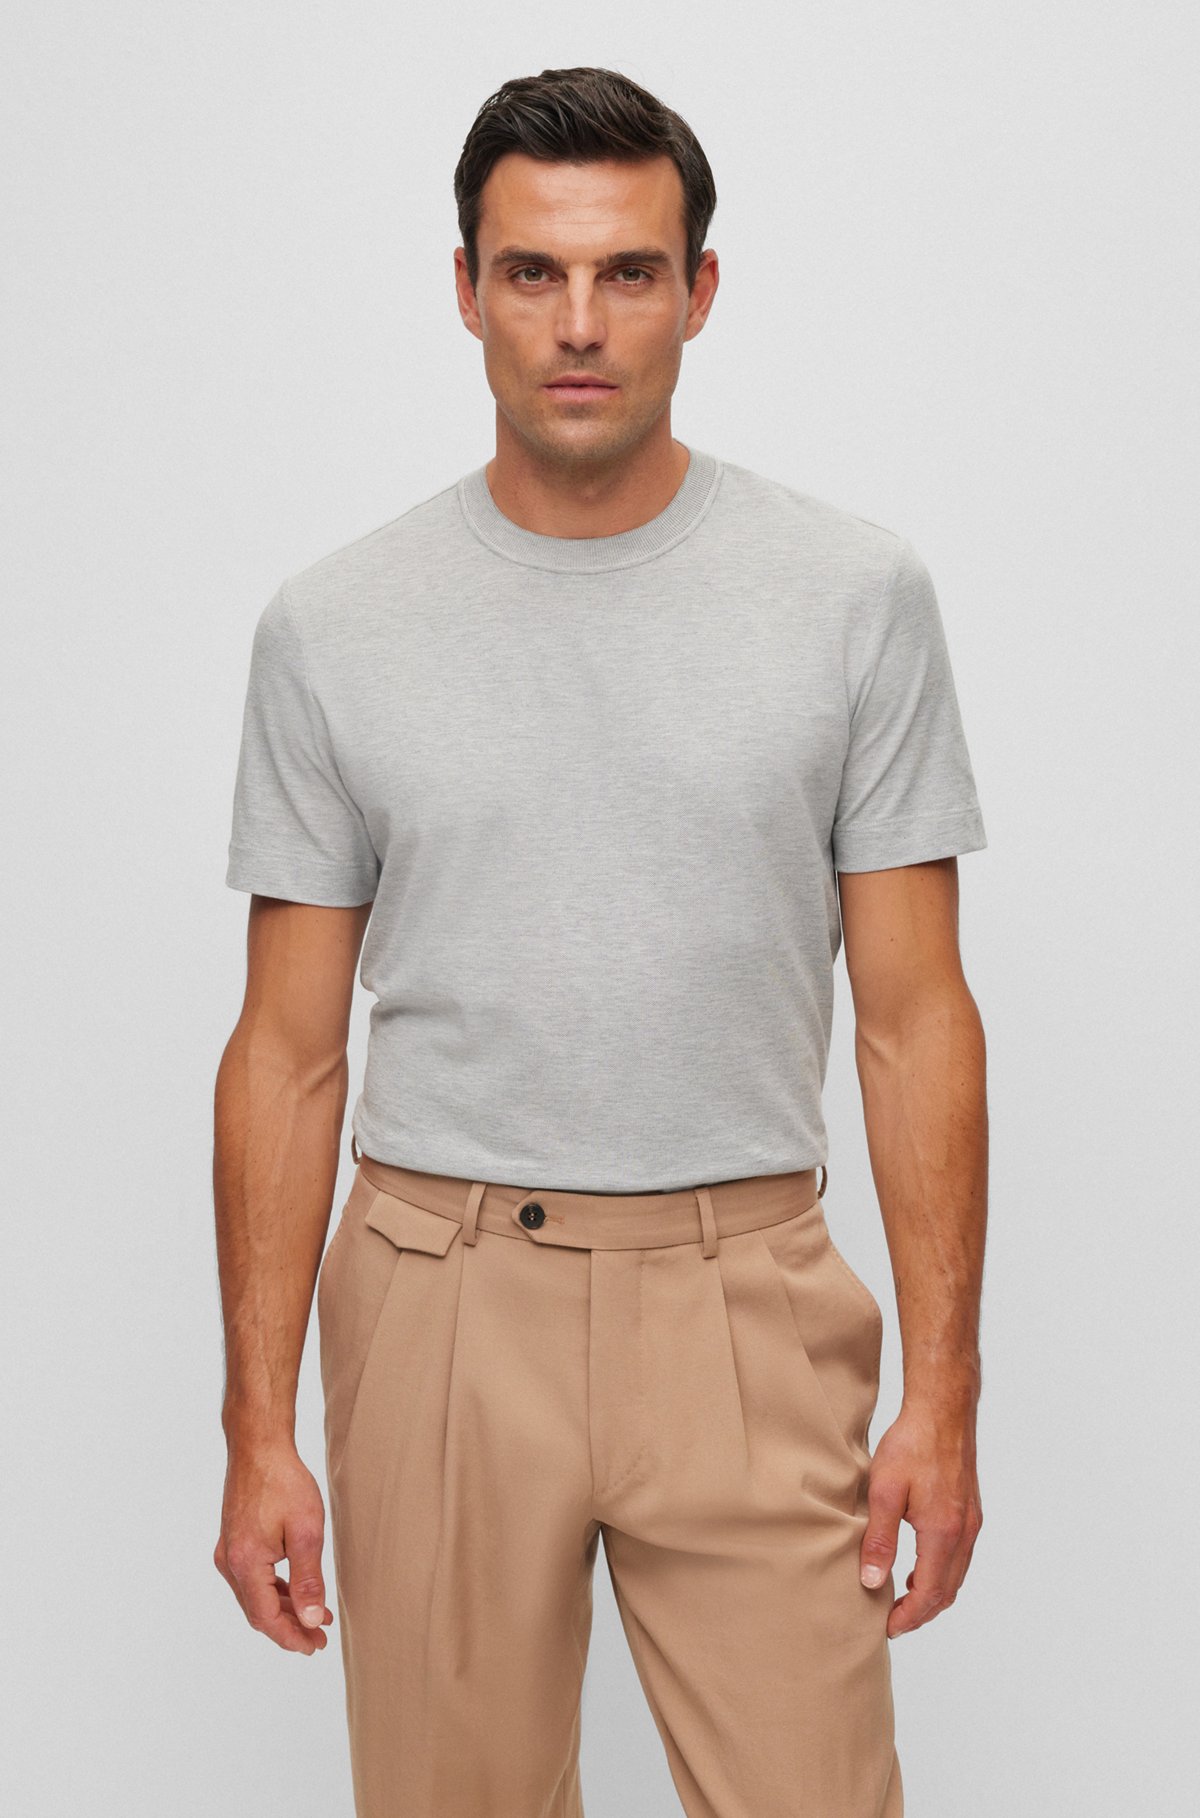 Cotton-cashmere T-shirt with mercerised finish, Light Grey